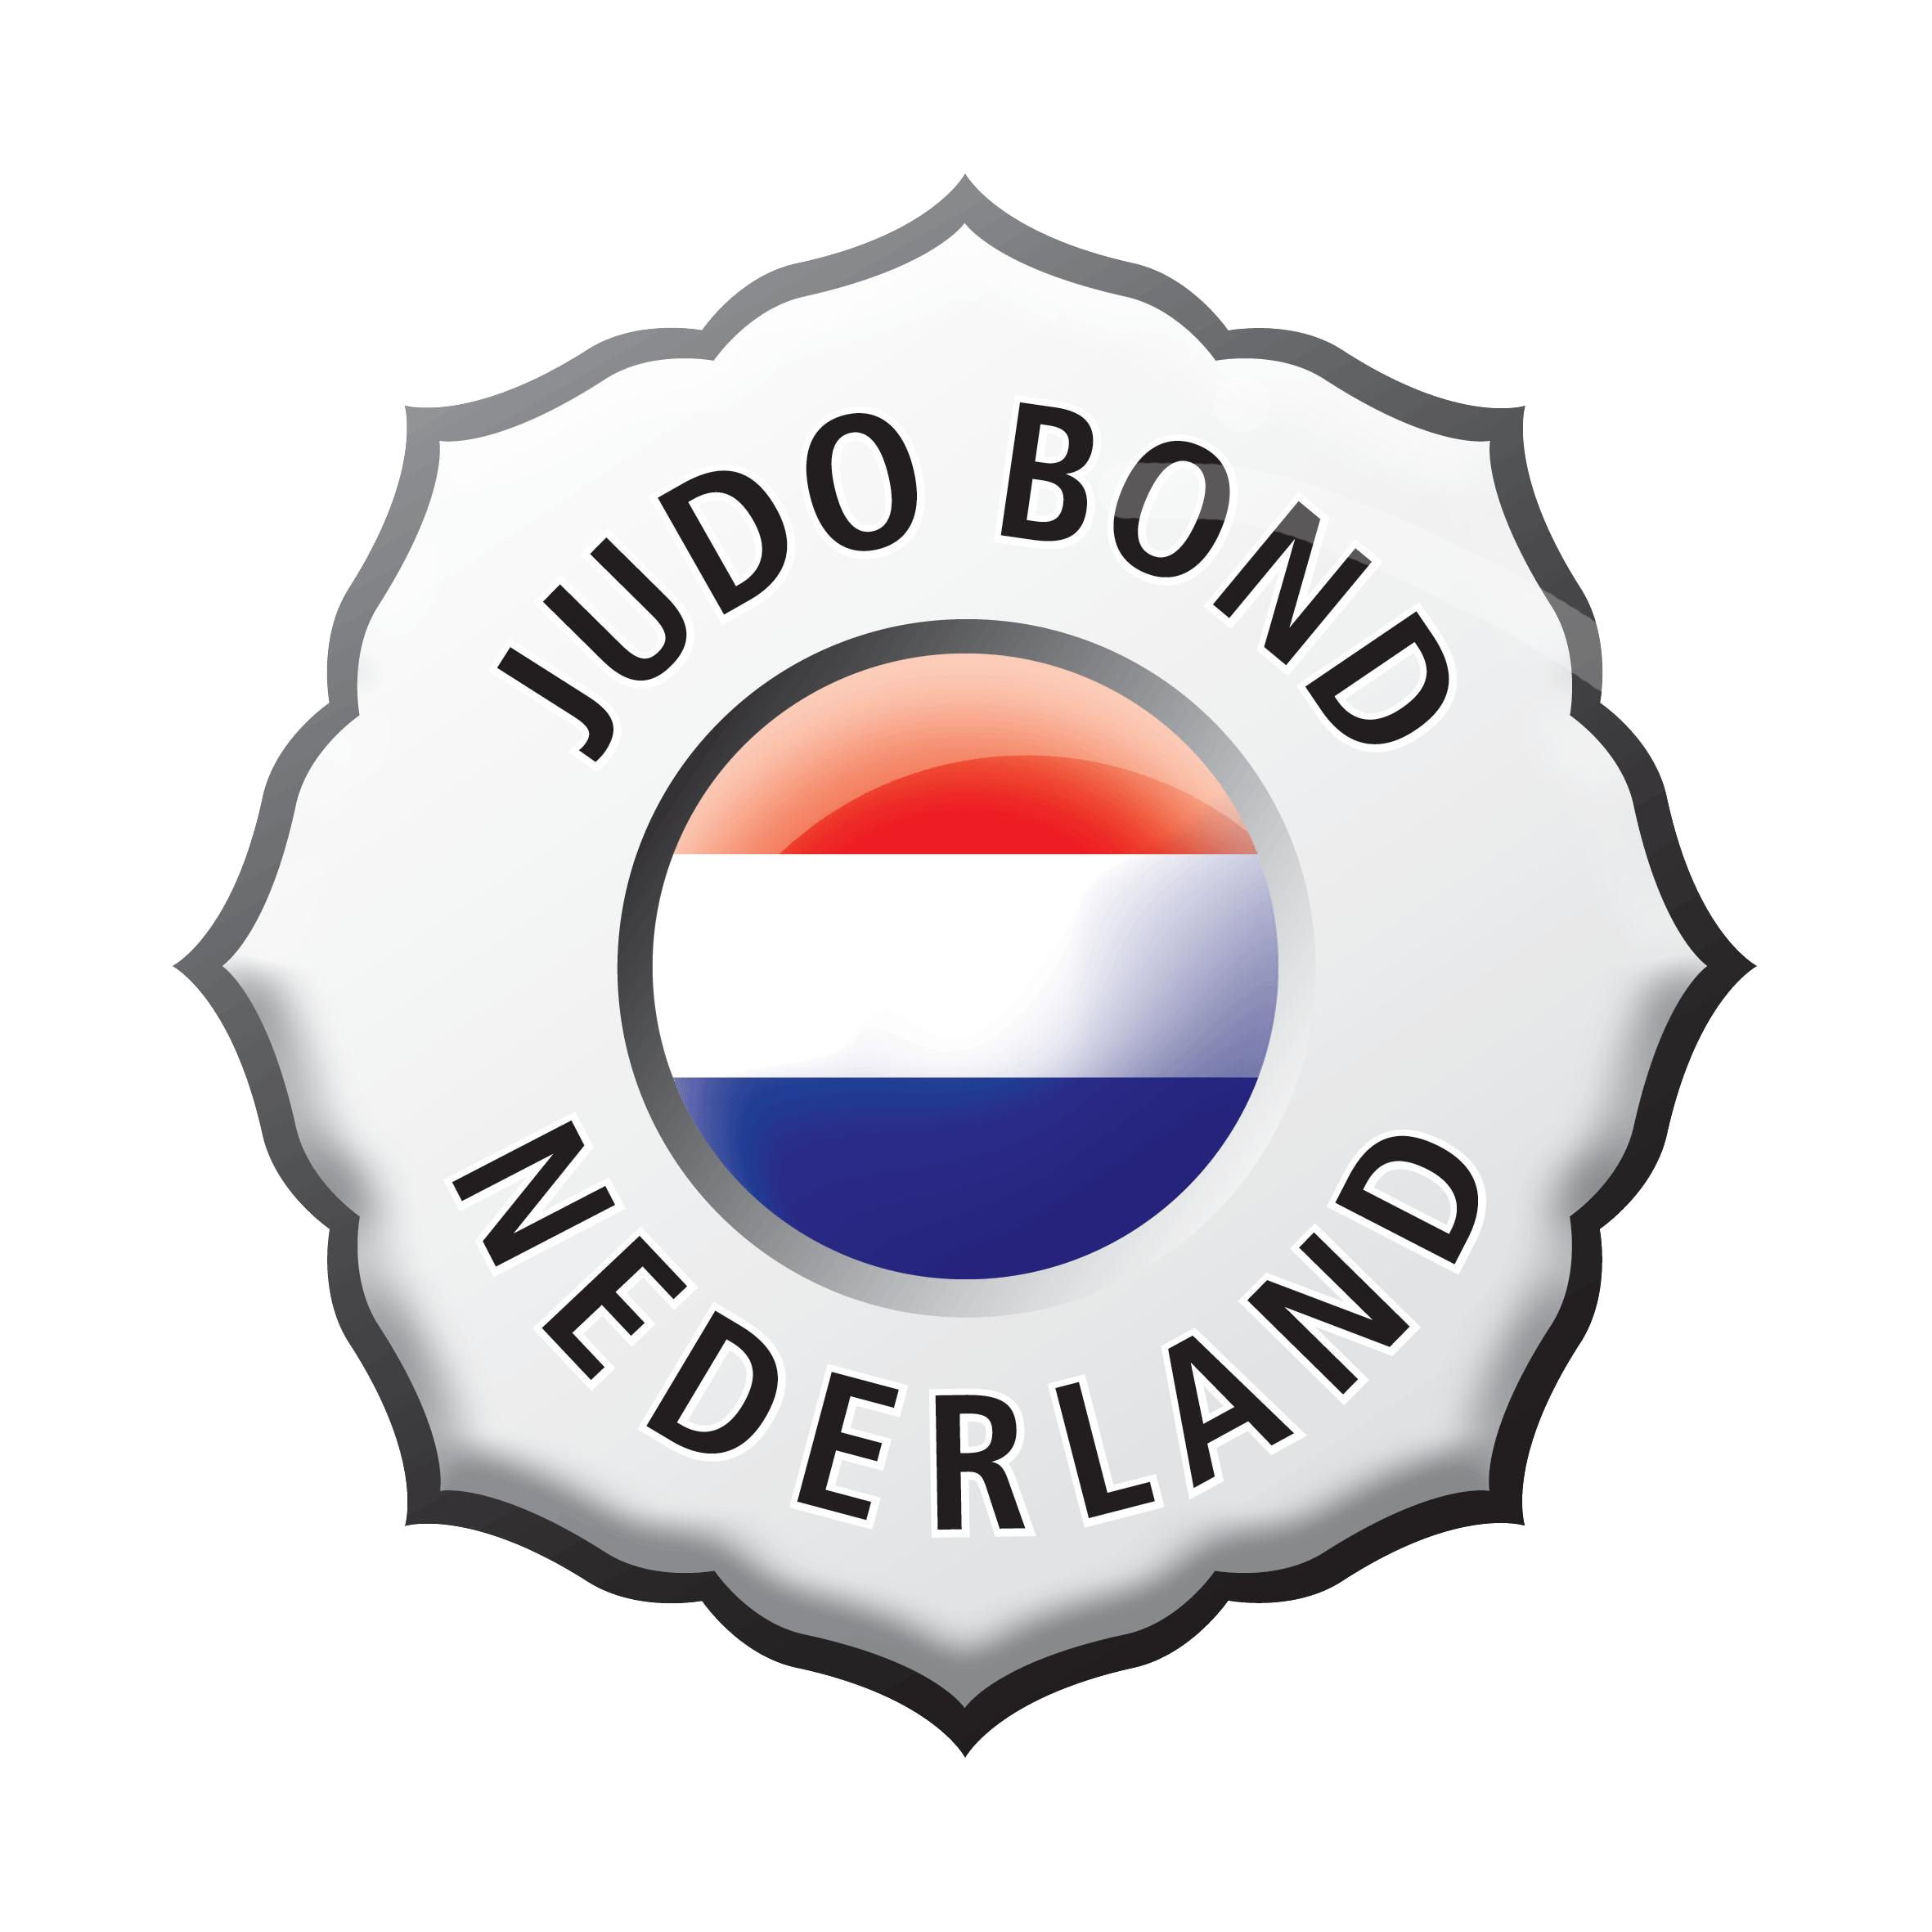 Judobond Nederland